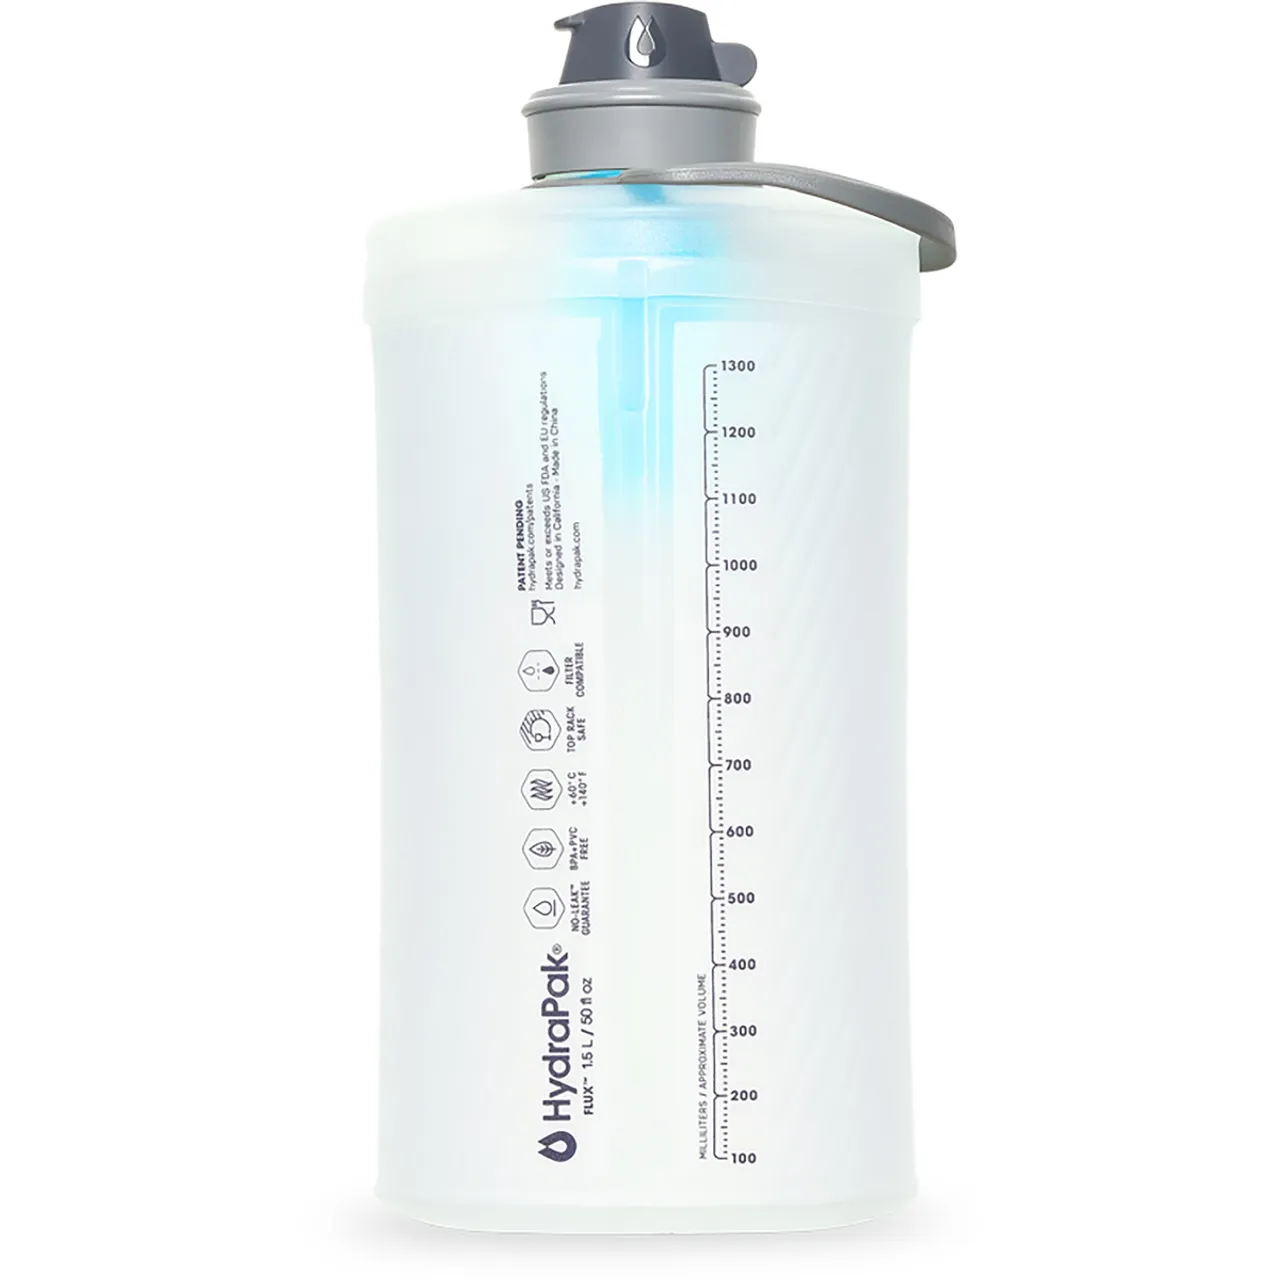 Hydrapak Flux+ Bottle 1.5L Filter Kit